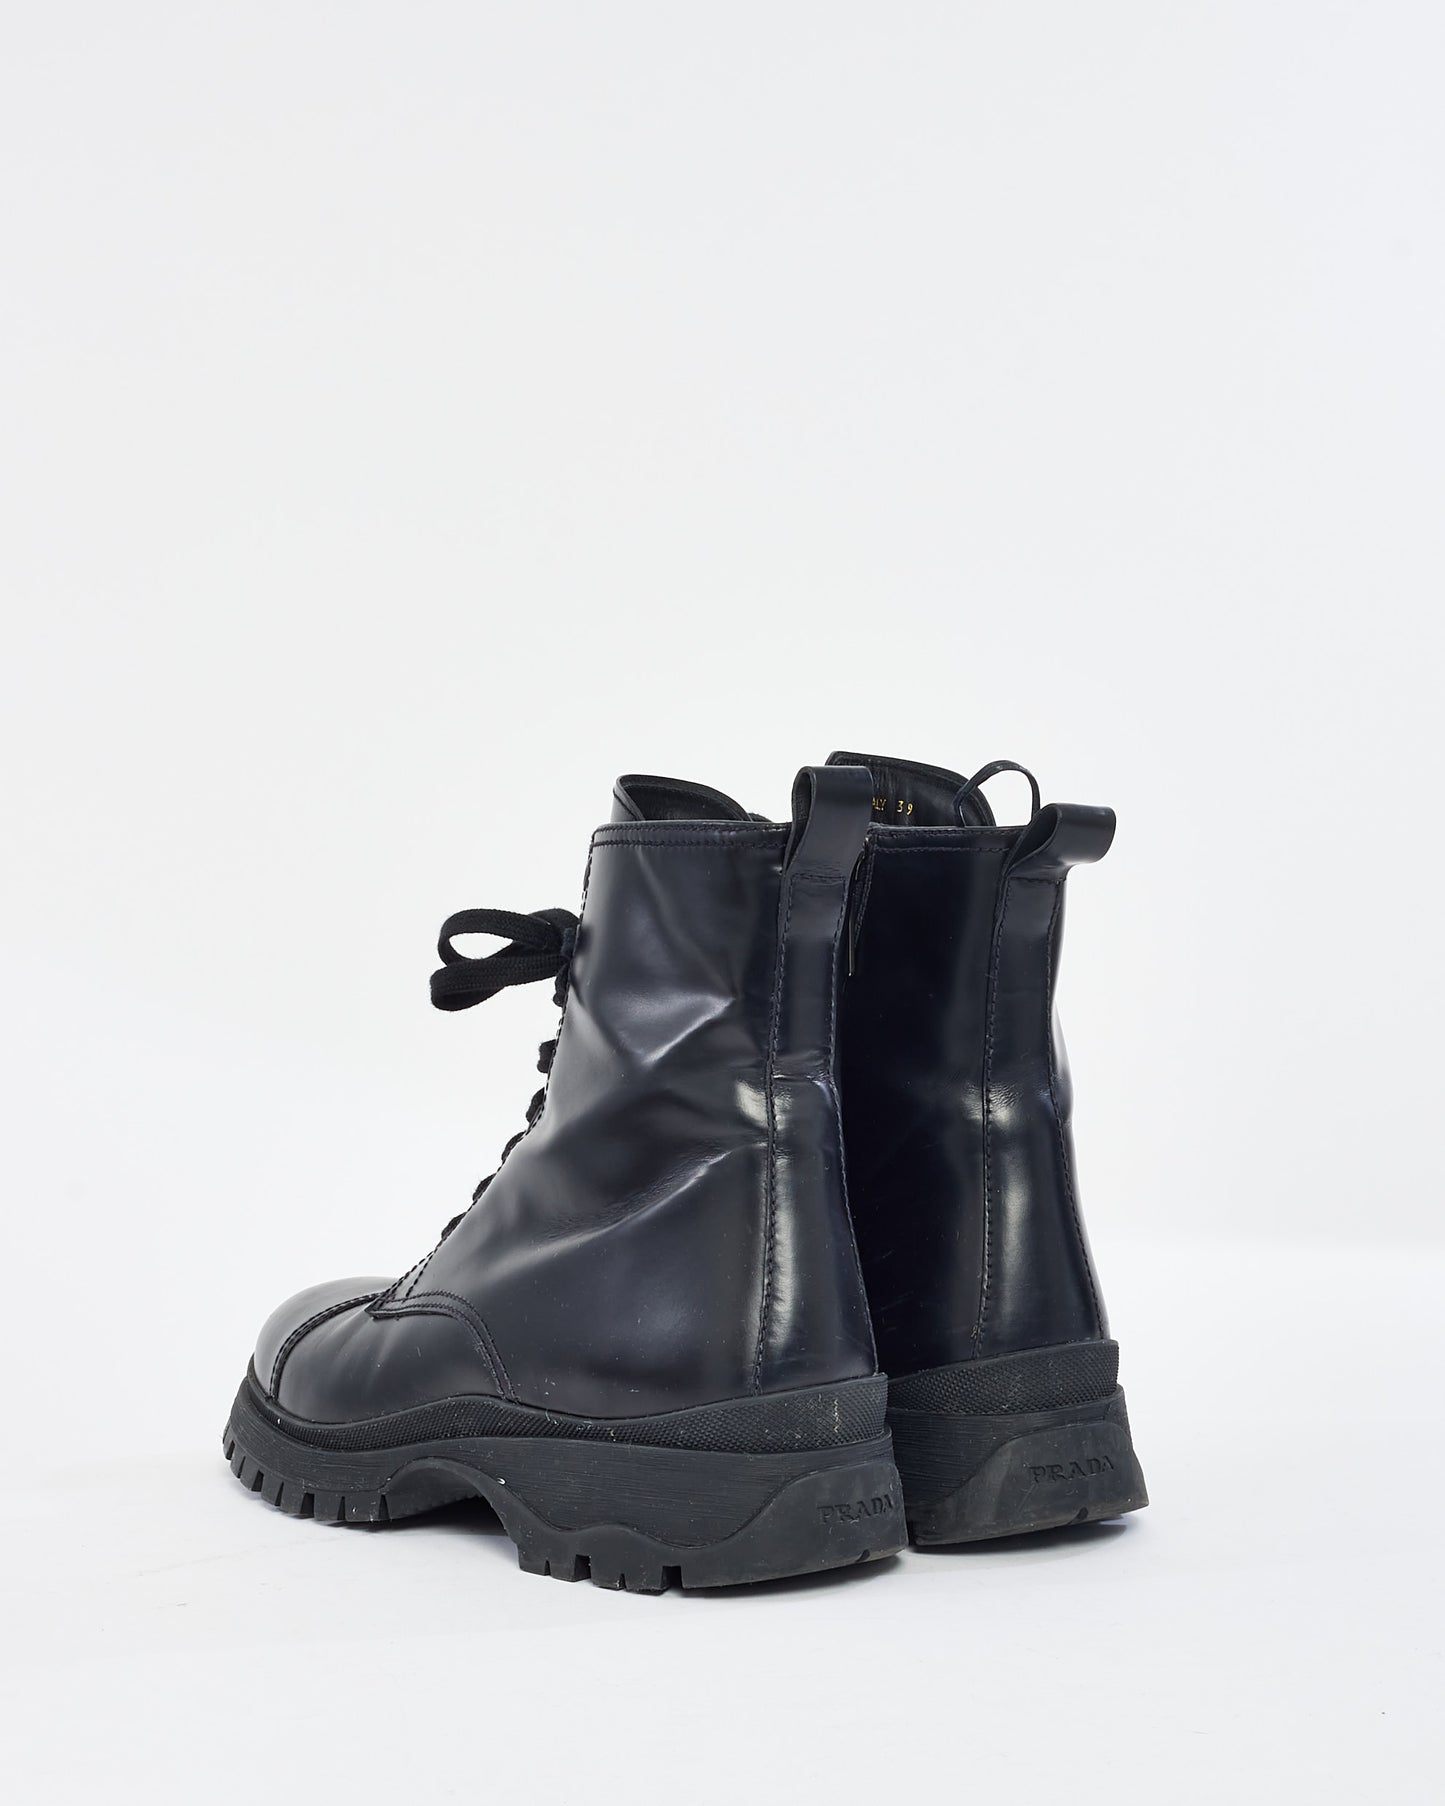 Prada Black Leather Combat Boots - 39